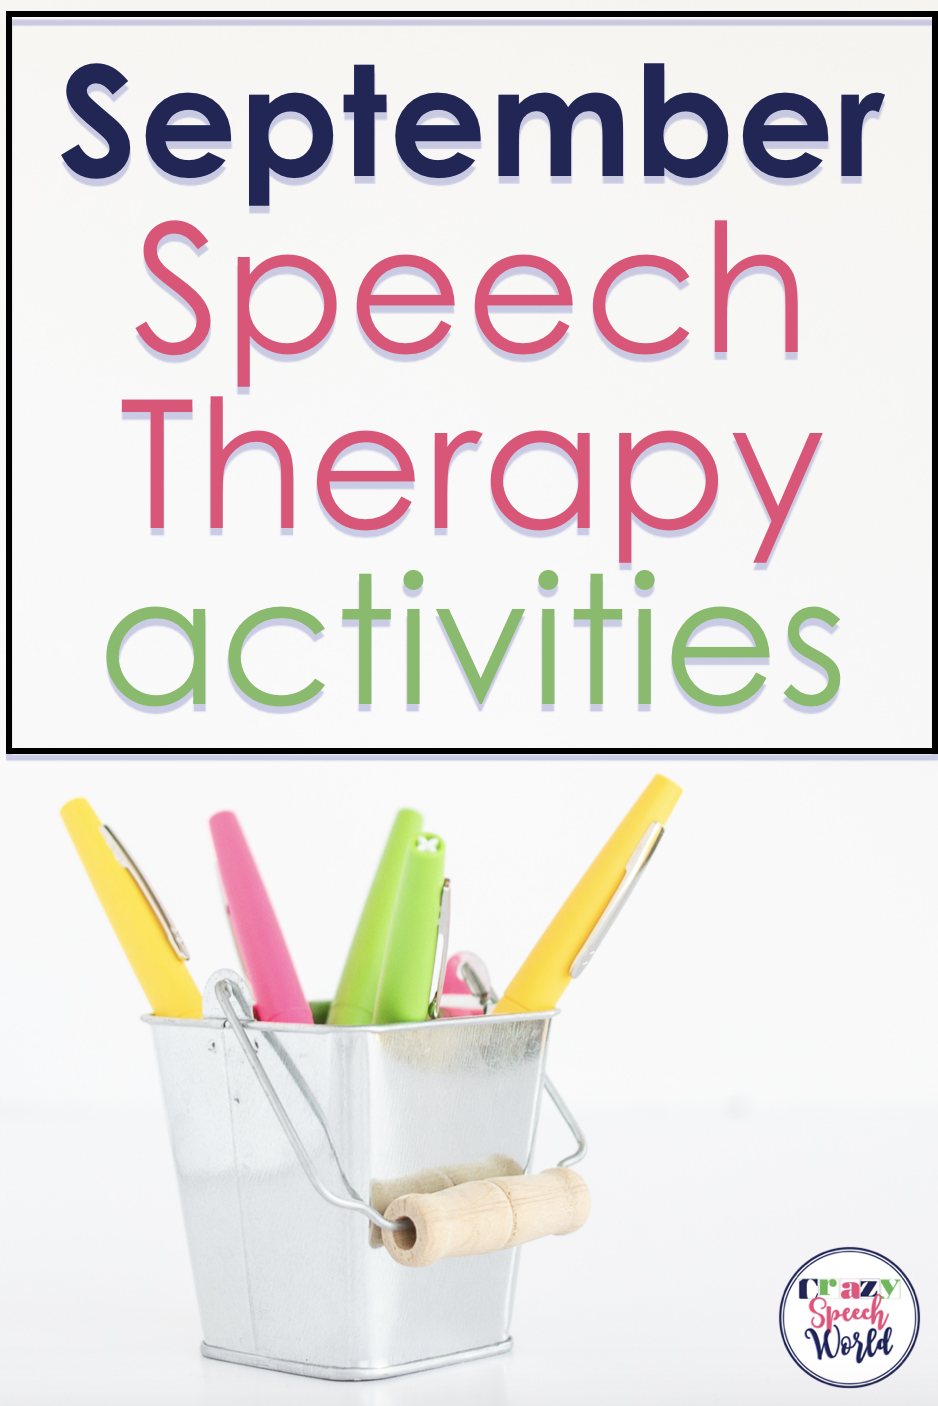 September Themed Activities for Speech Therapy Crazy Speech World